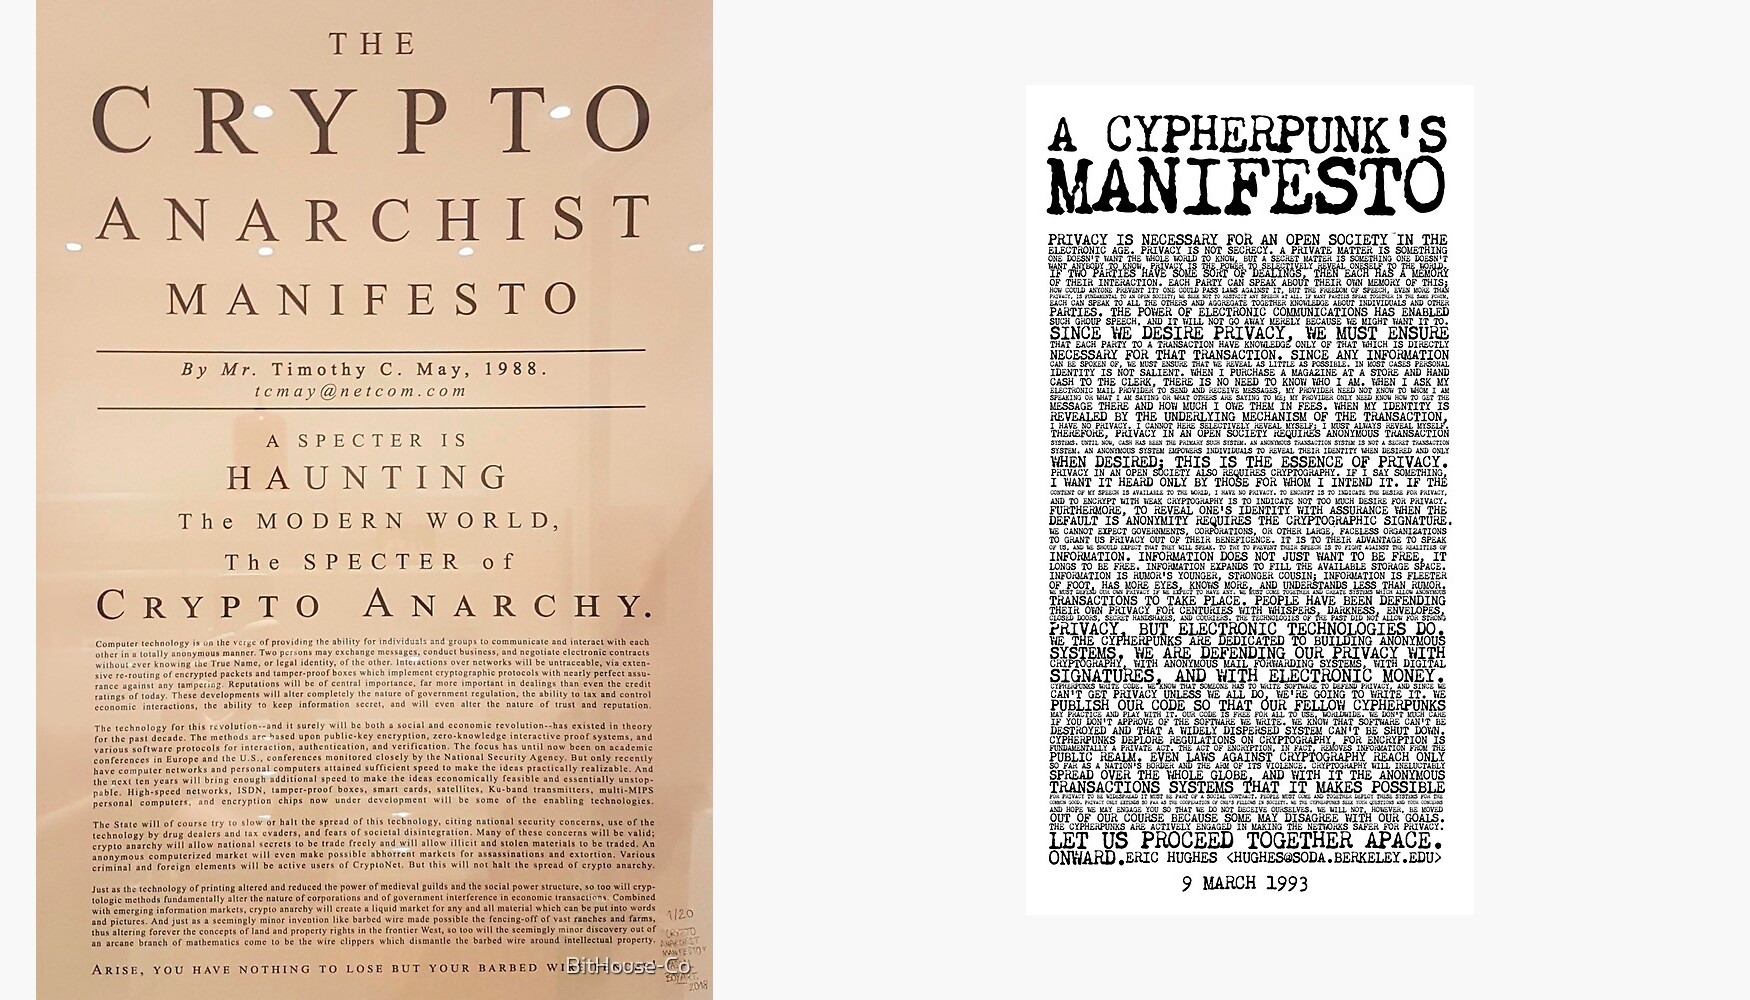 The Crypto Anarchist Manifesto and A Cypherpunk's Manifesto.